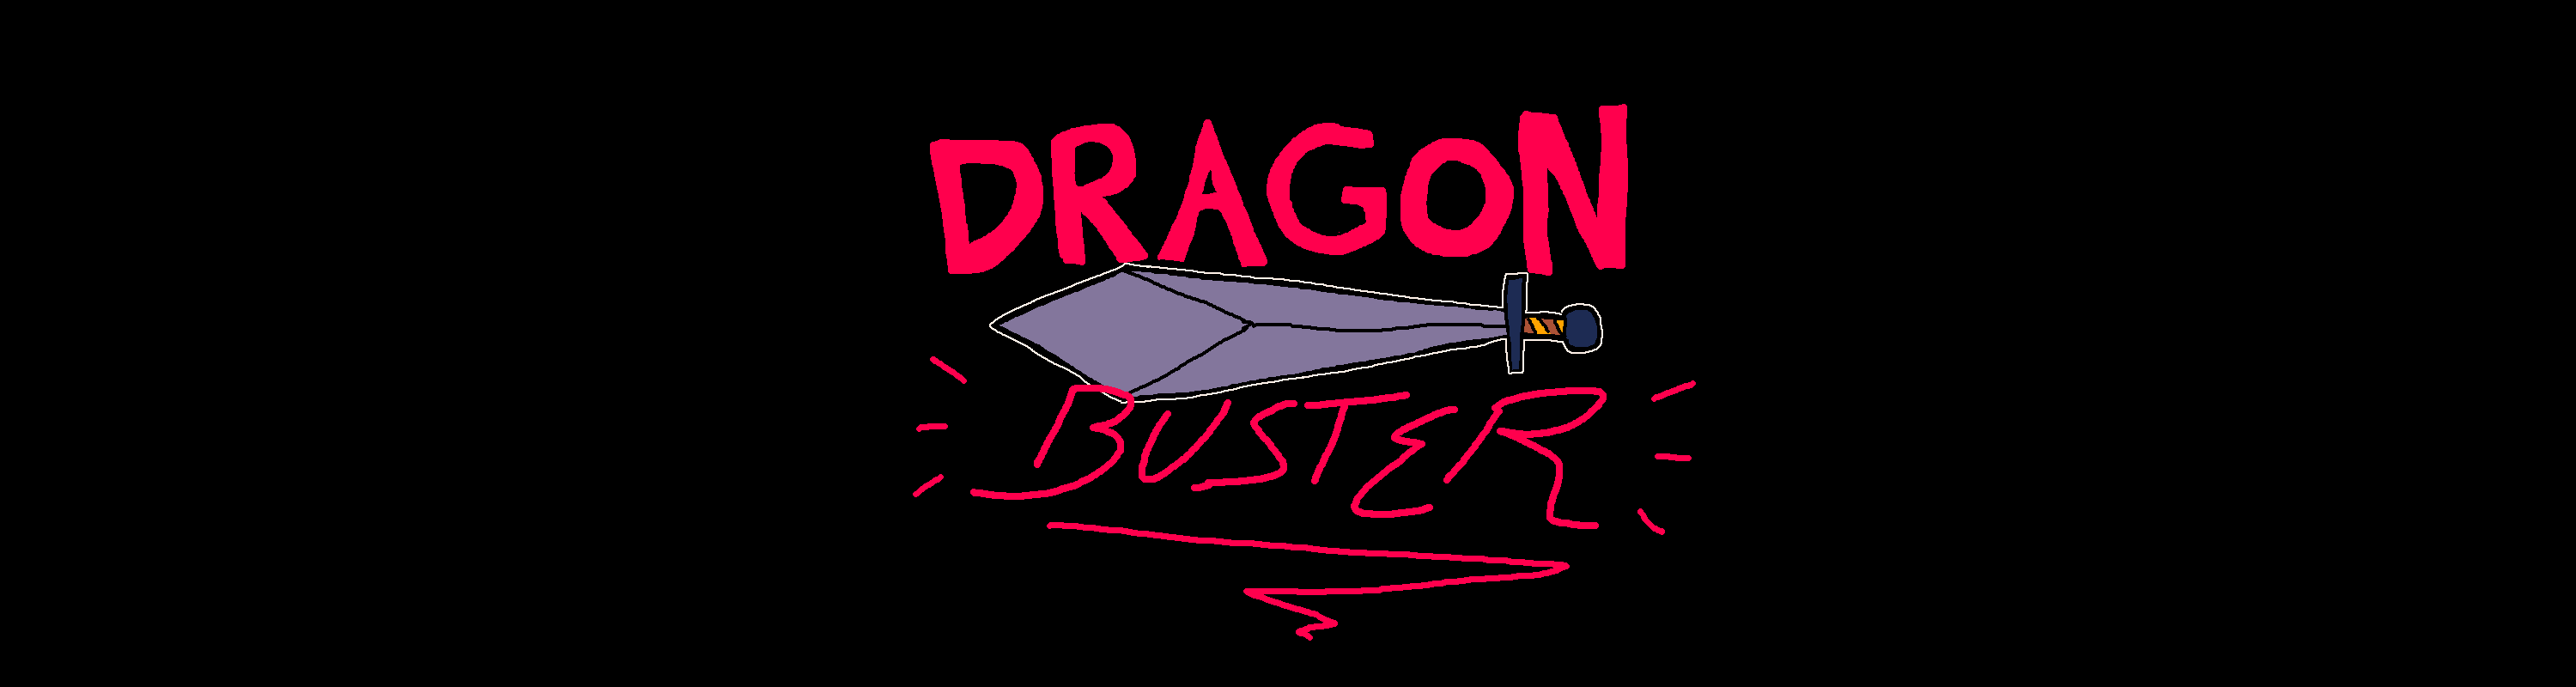 DRAGON BUSTER